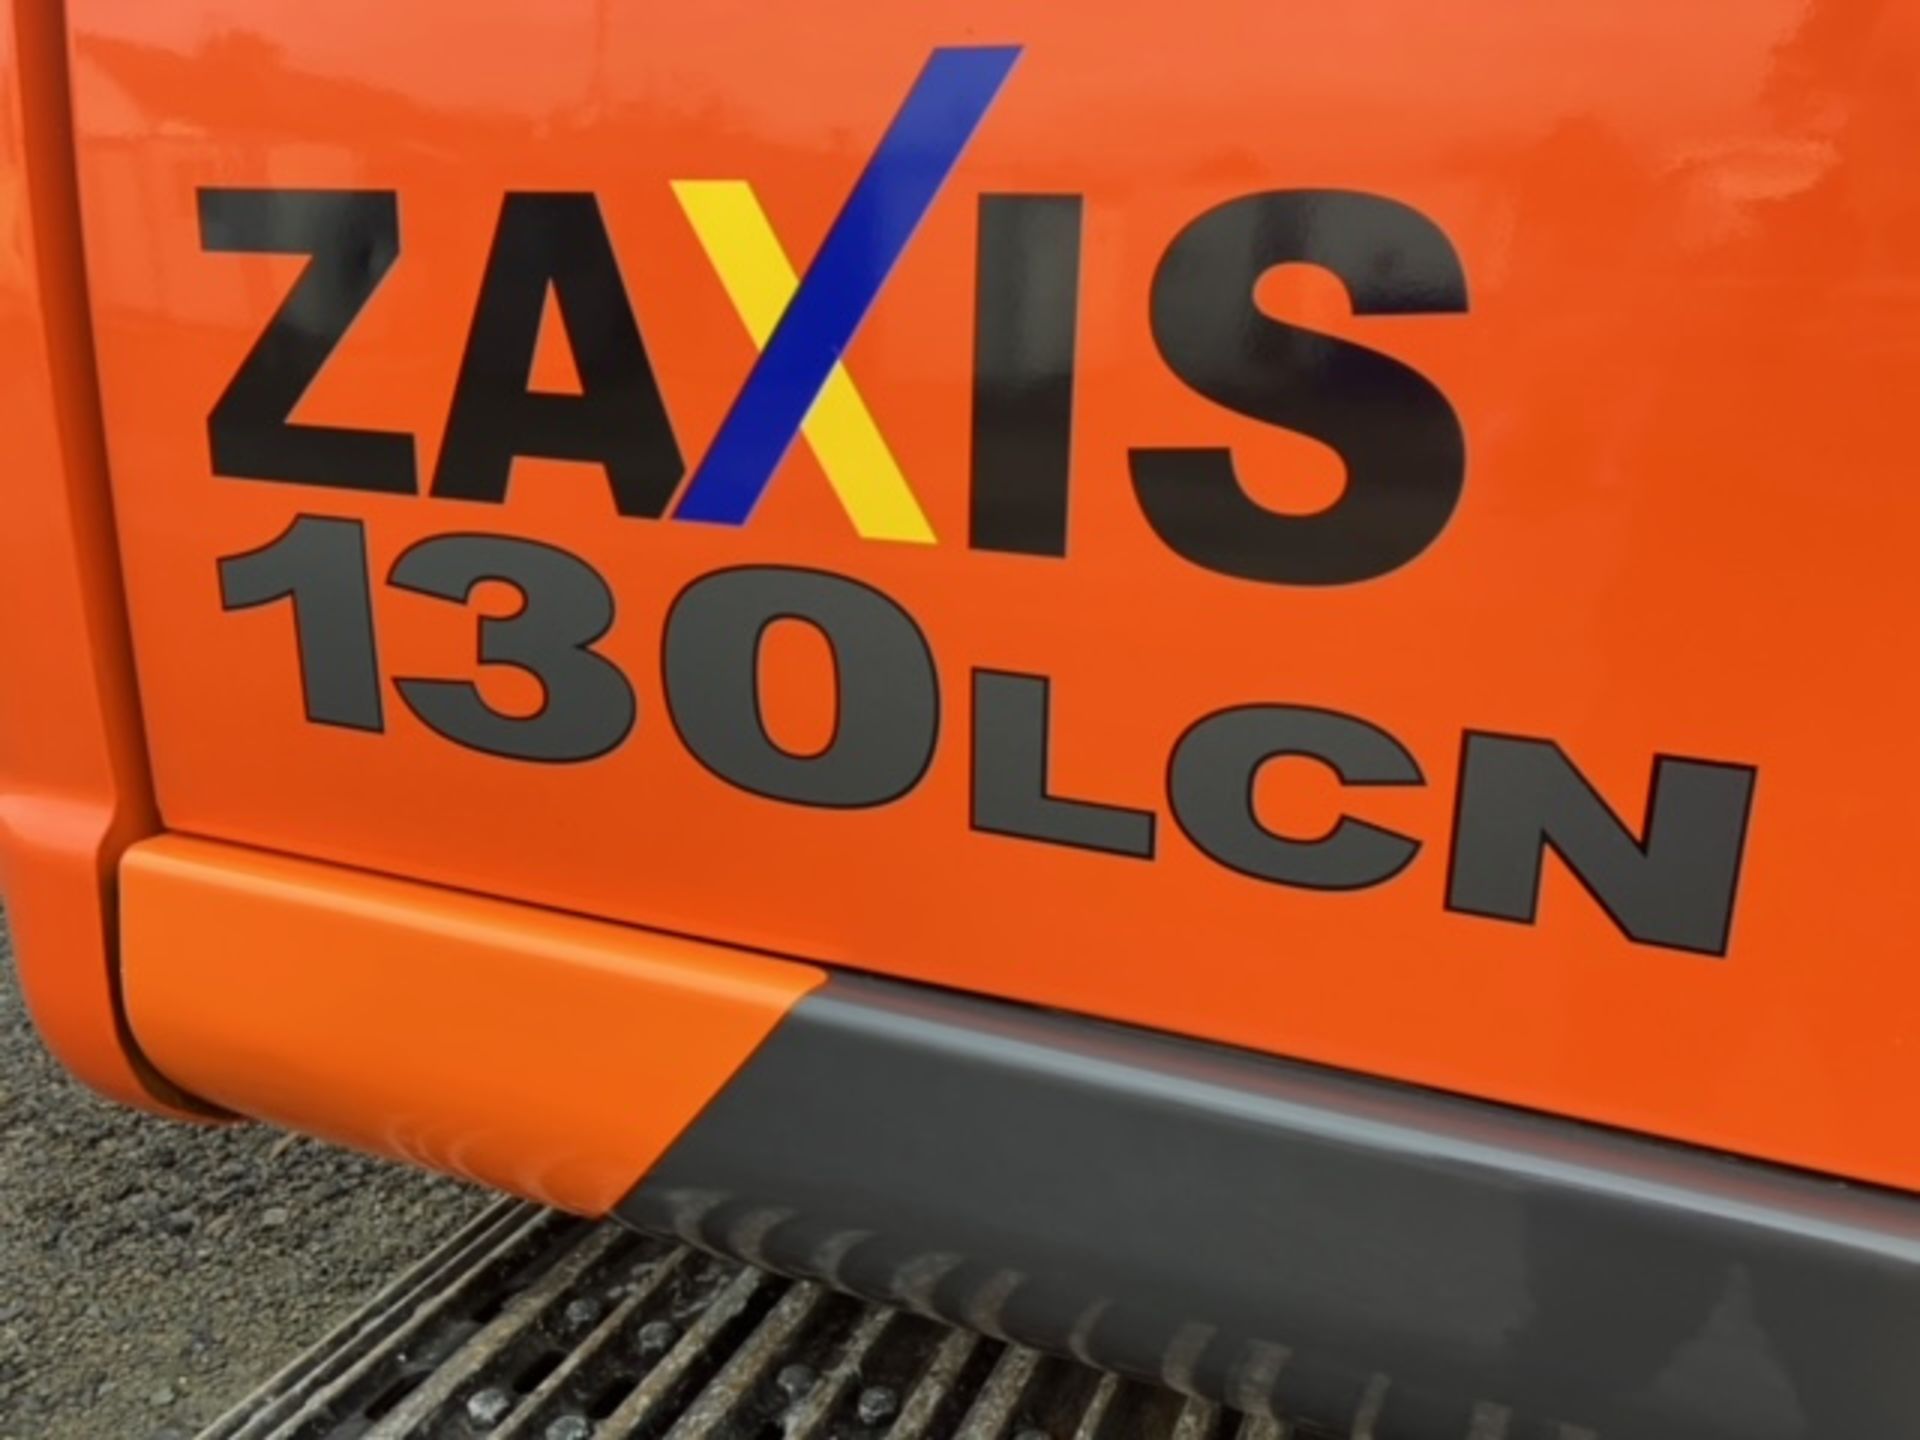 2016 Zaxis Zx 130/5 EXCAVATOR - Image 18 of 24